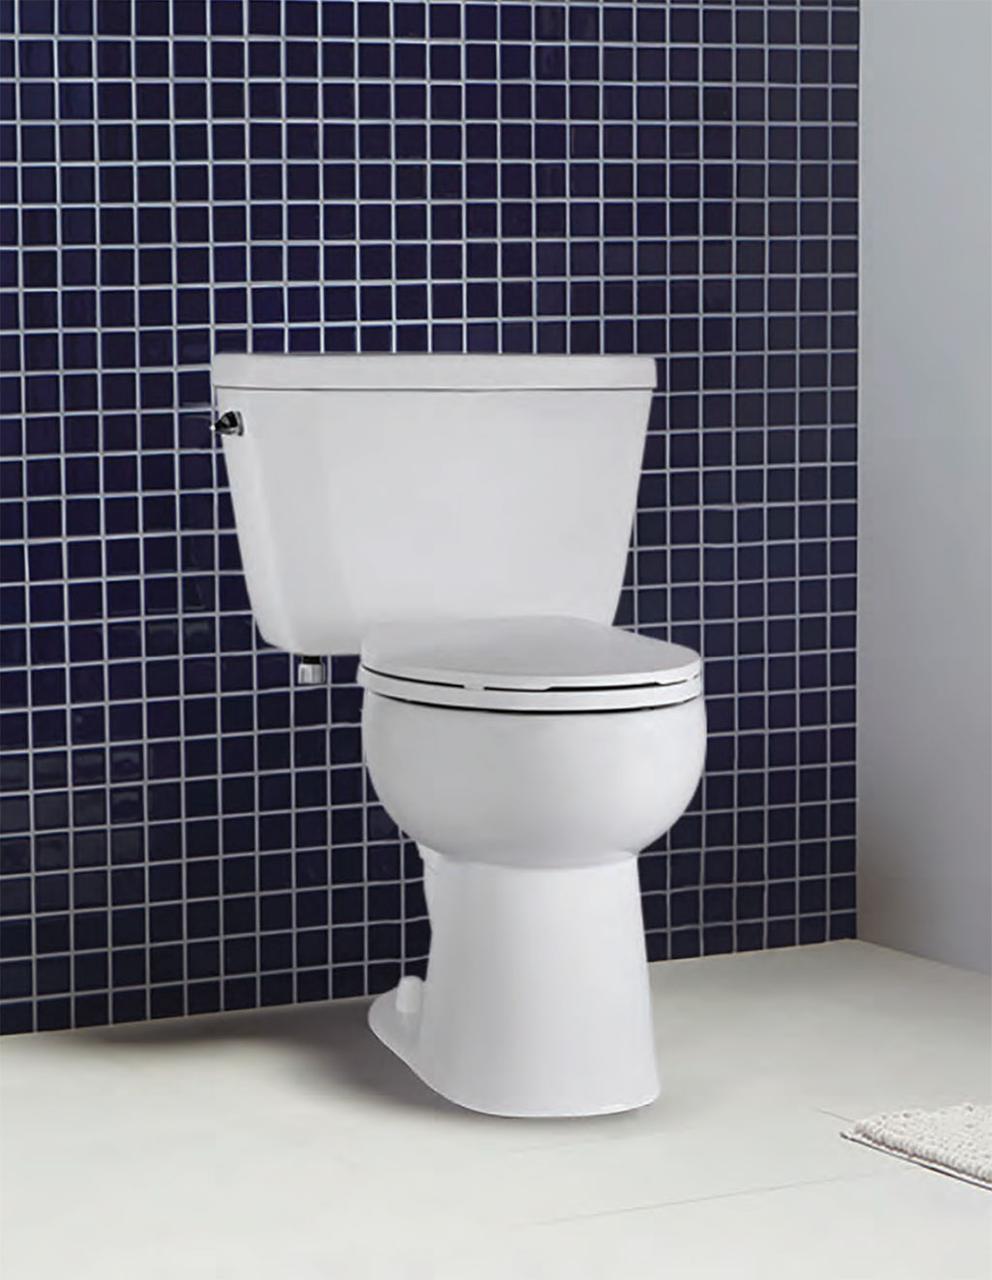 Toilet seat, Plumbing fixture, Material property, Bathroom, Purple, Rectangle, Line, Wall